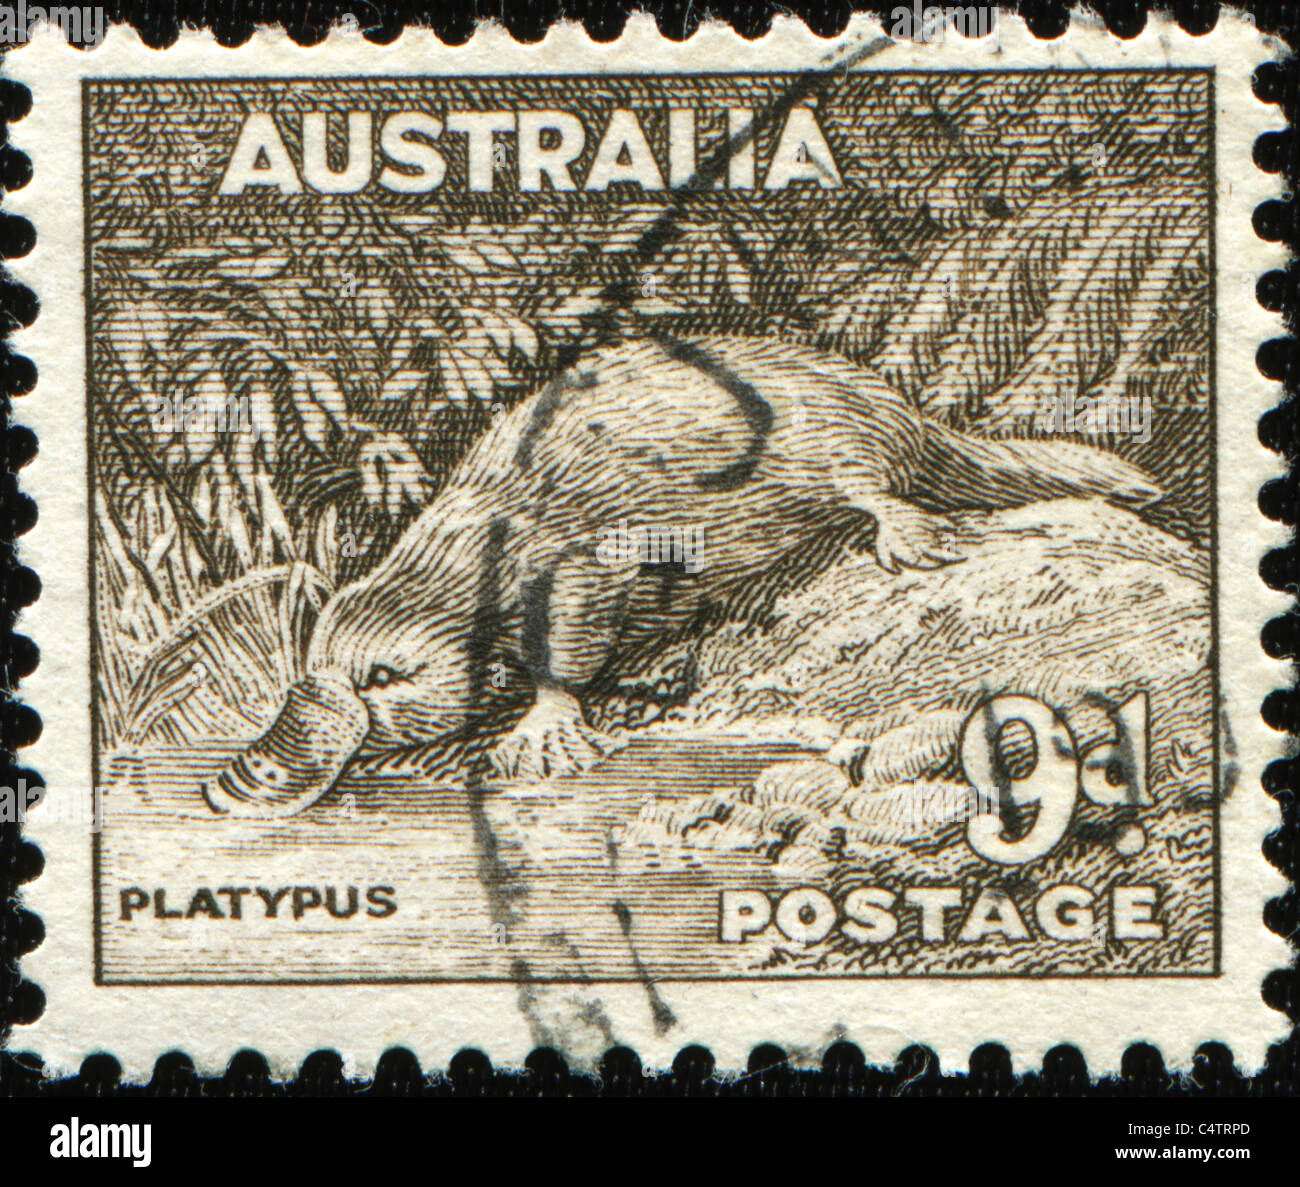 AUSTRALIA - CIRCA 1937: A stamp printed in Australia shows platypus - Ornithorhynchus anatinus, circa 1937 Stock Photo